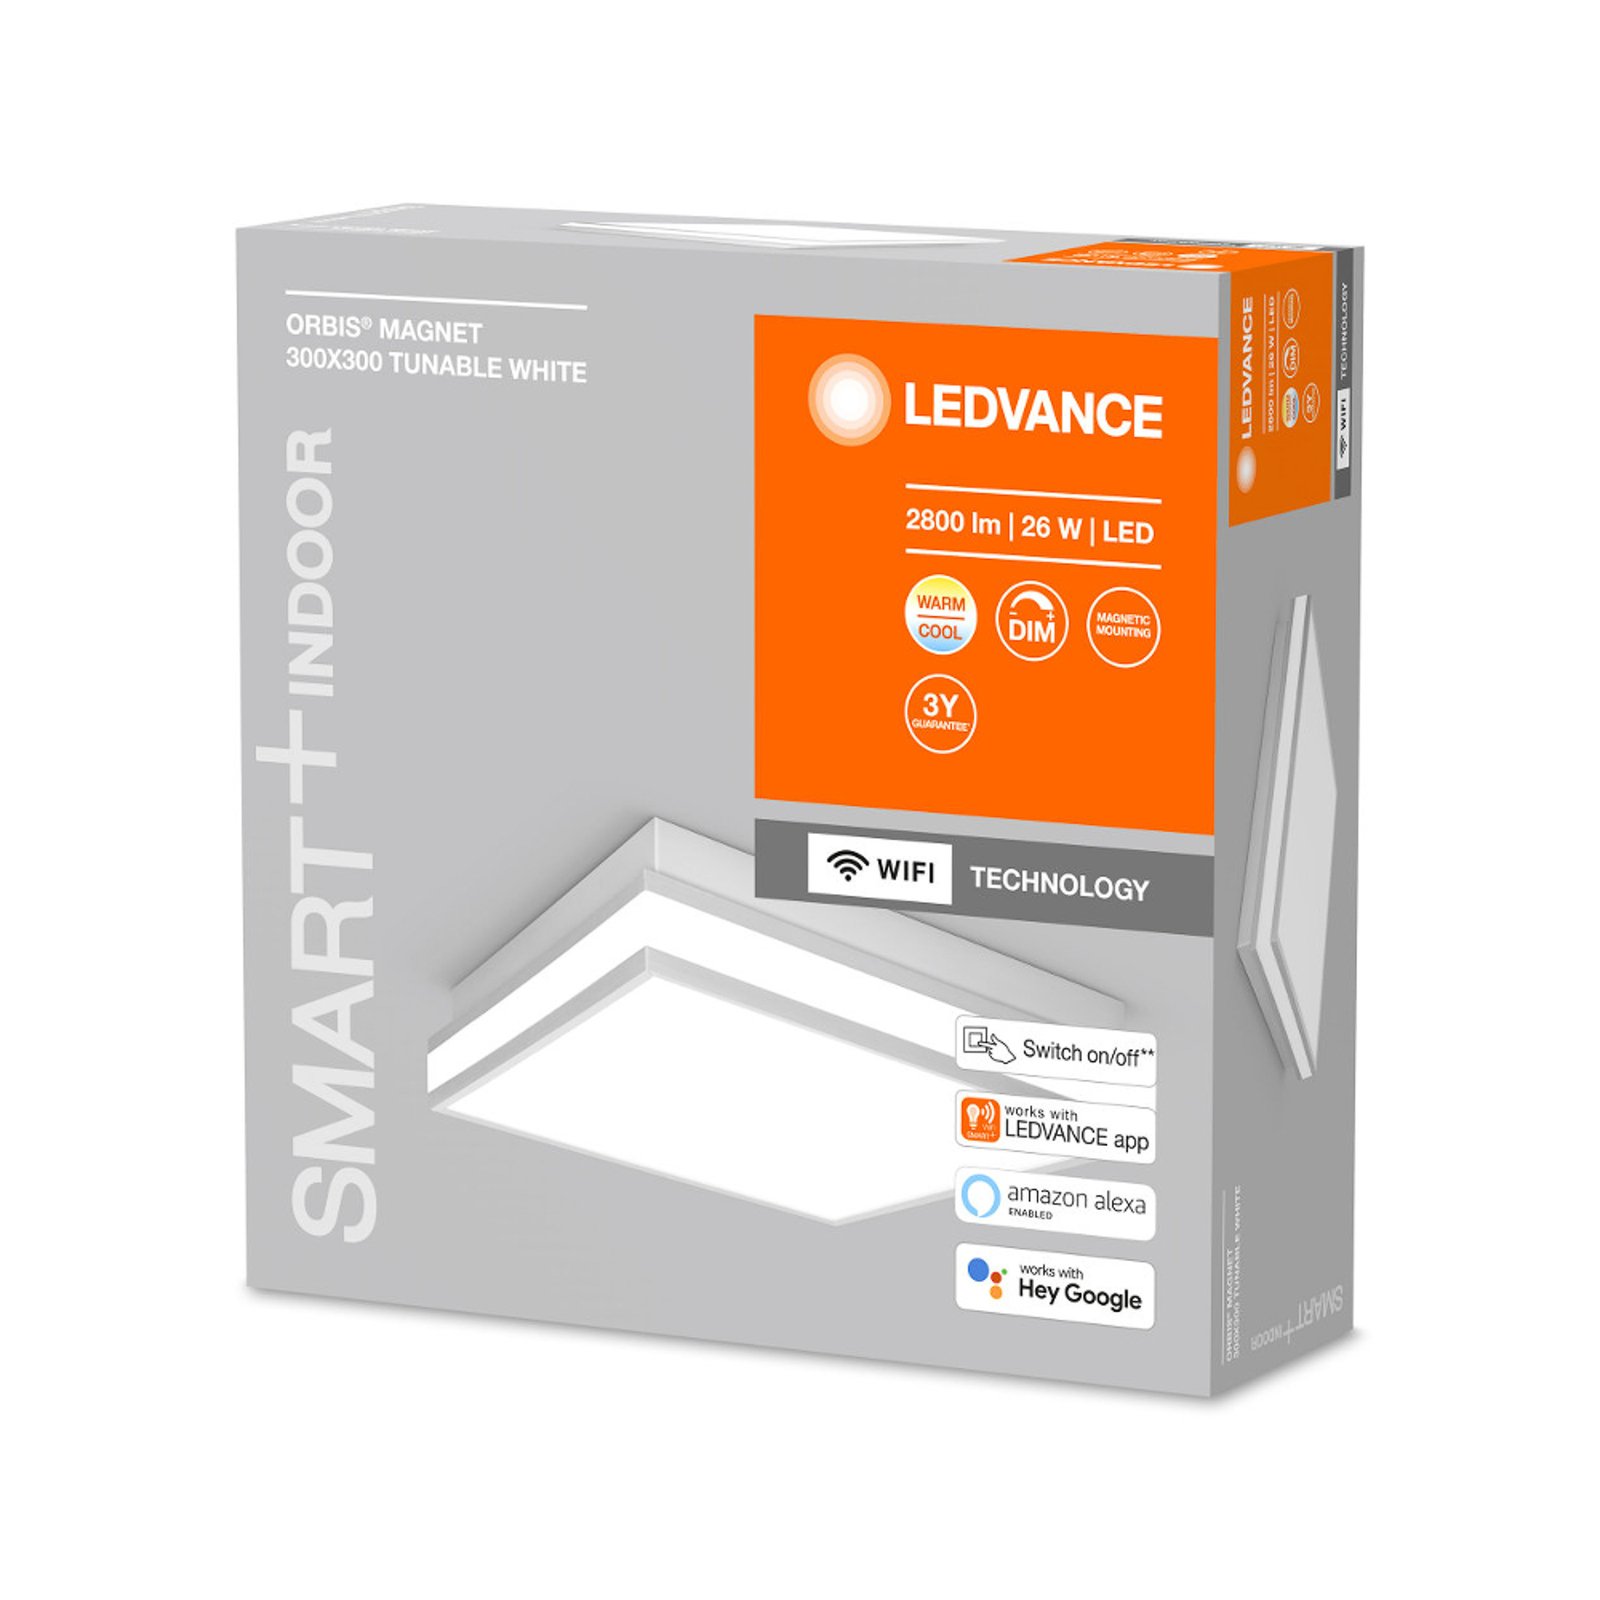 LEDVANCE SMART+ WiFi Orbis Magnet grey, 30x30cm